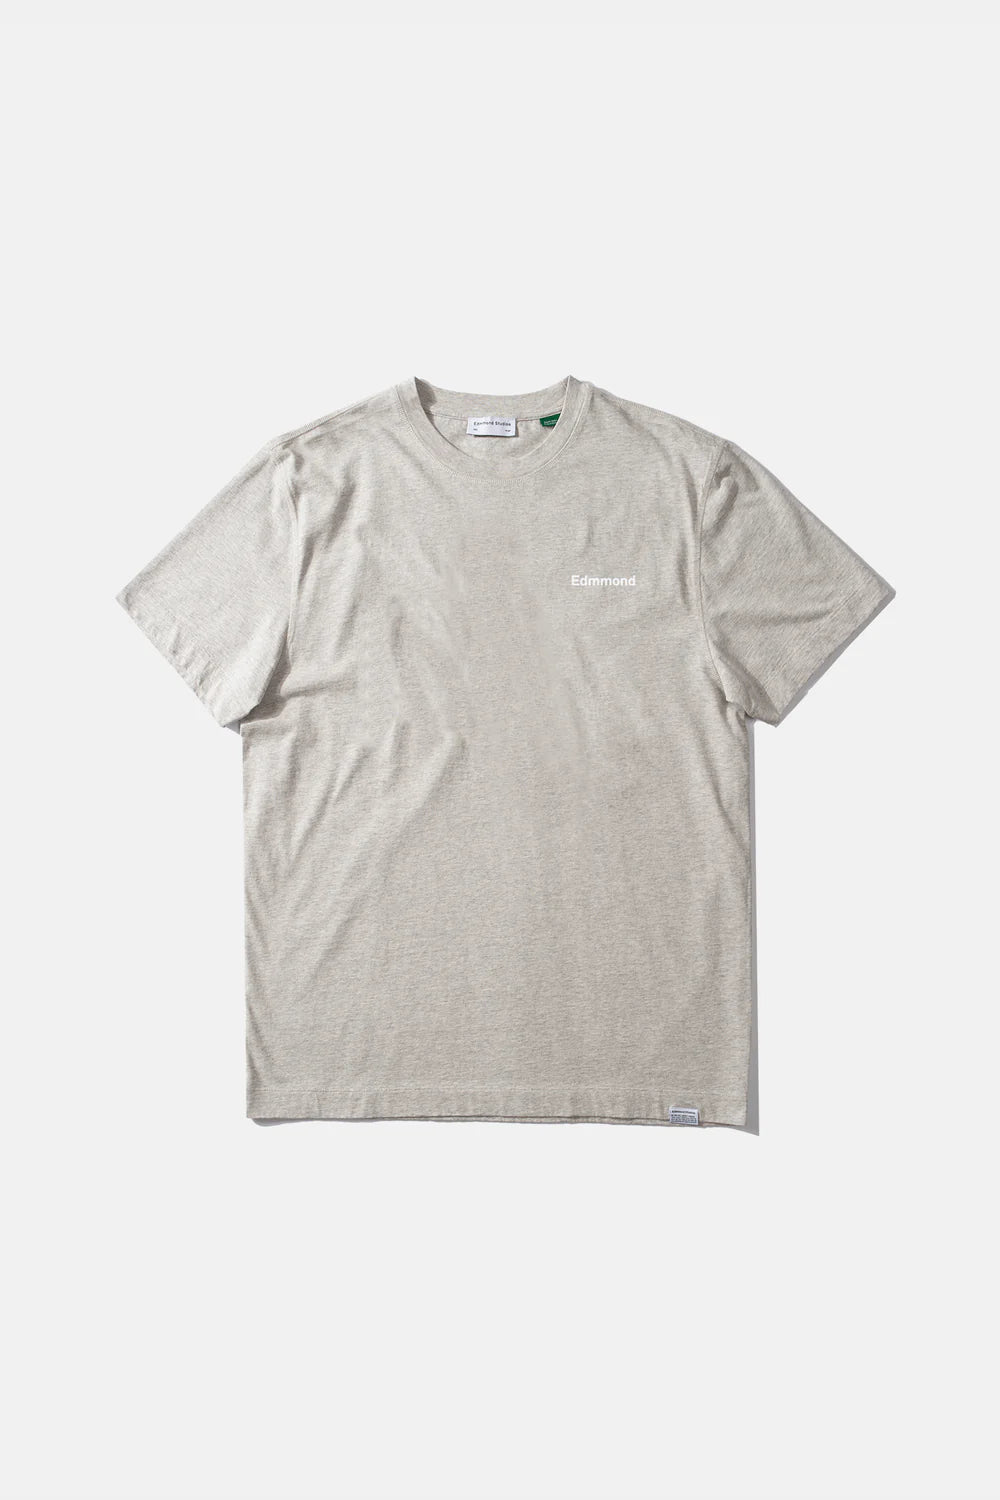 Edmmond Studios Mini Logo T-Shirt - Grey Melange